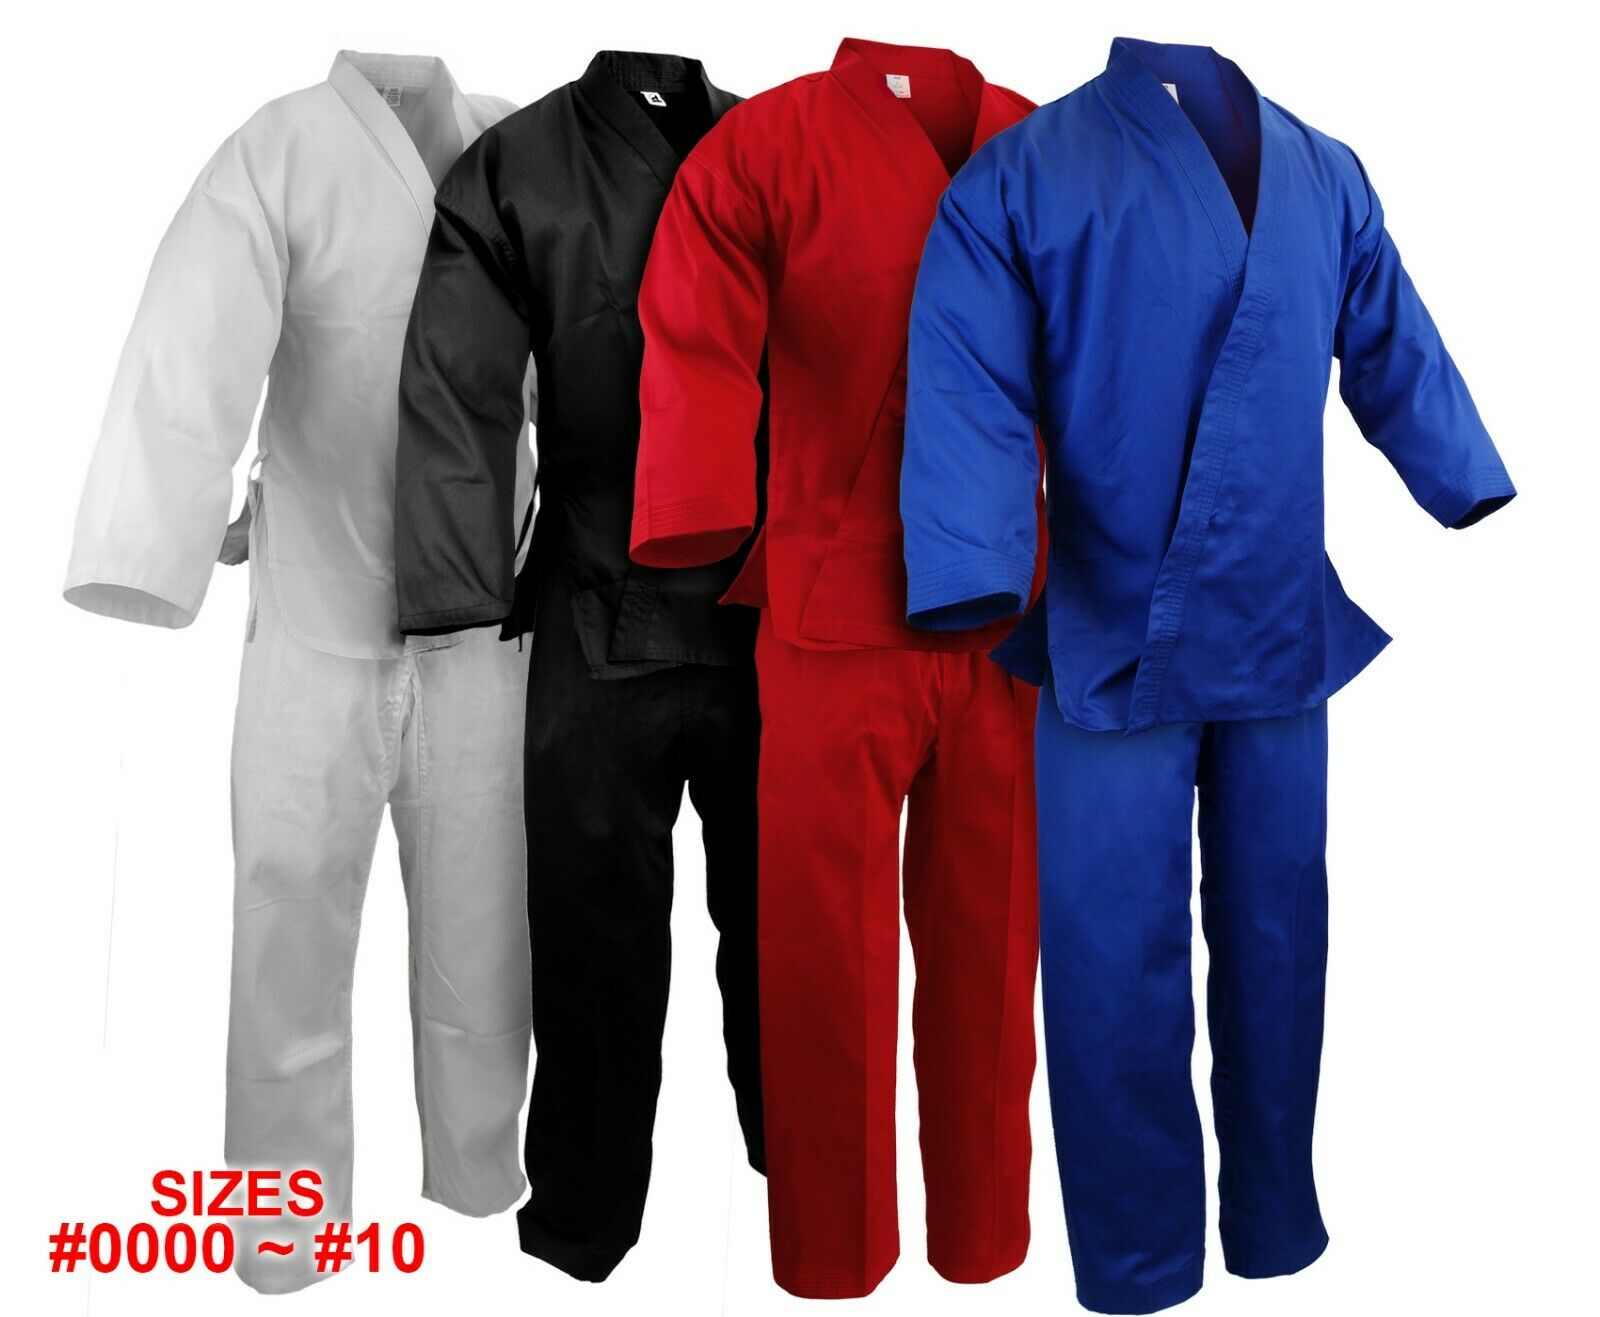 New Martial Arts Karate 7.5 Oz Gi Uniform W/white Belt Wh/bk/red/blue, #0000~#10